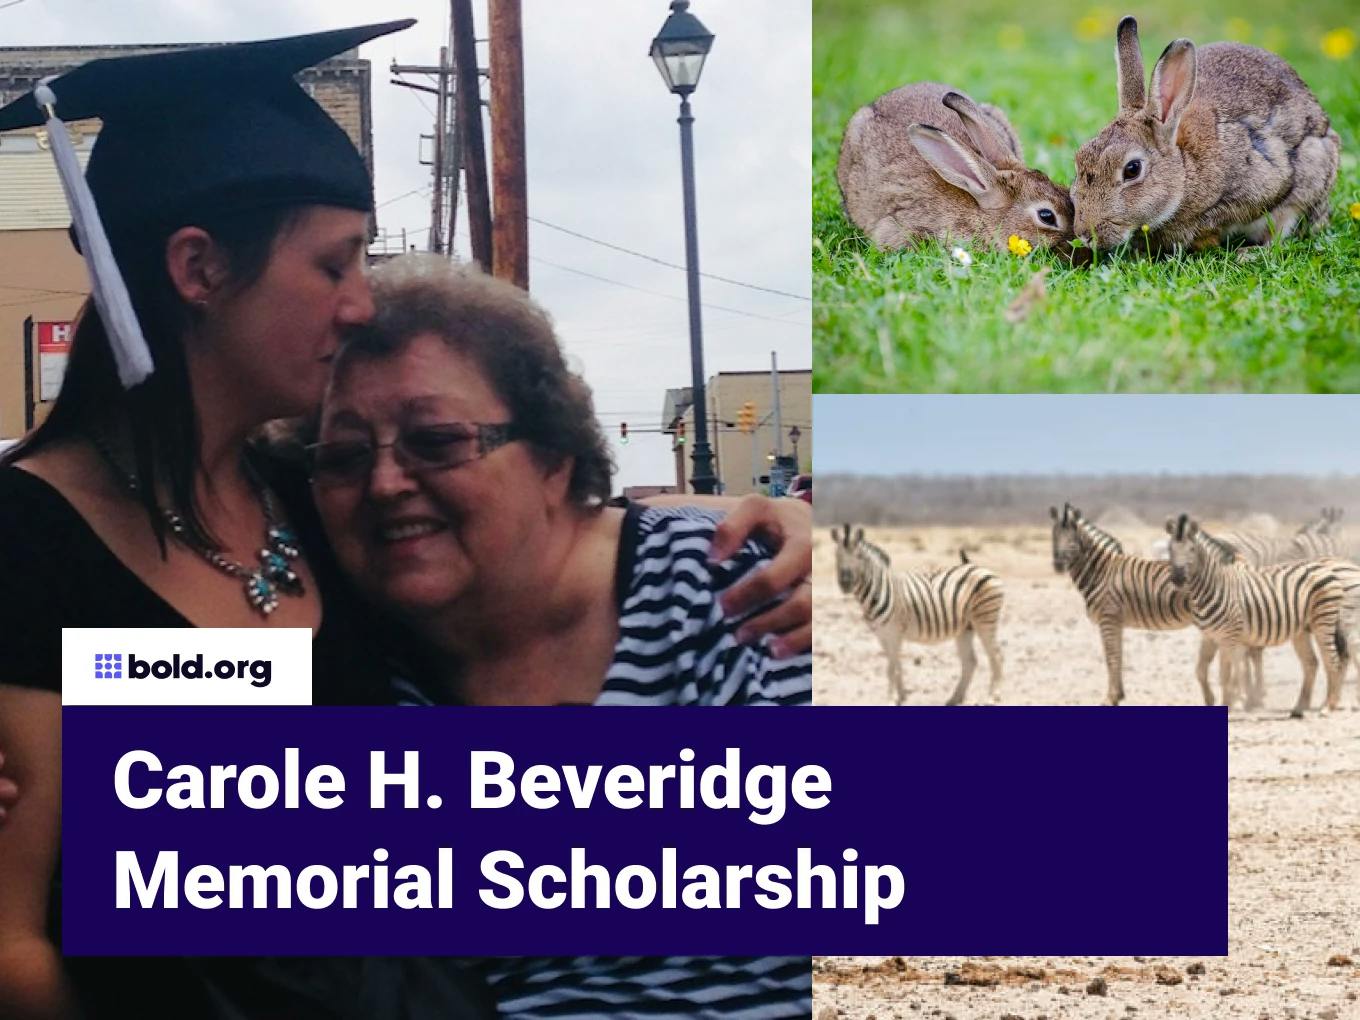 Carole H. Beveridge Memorial Scholarship